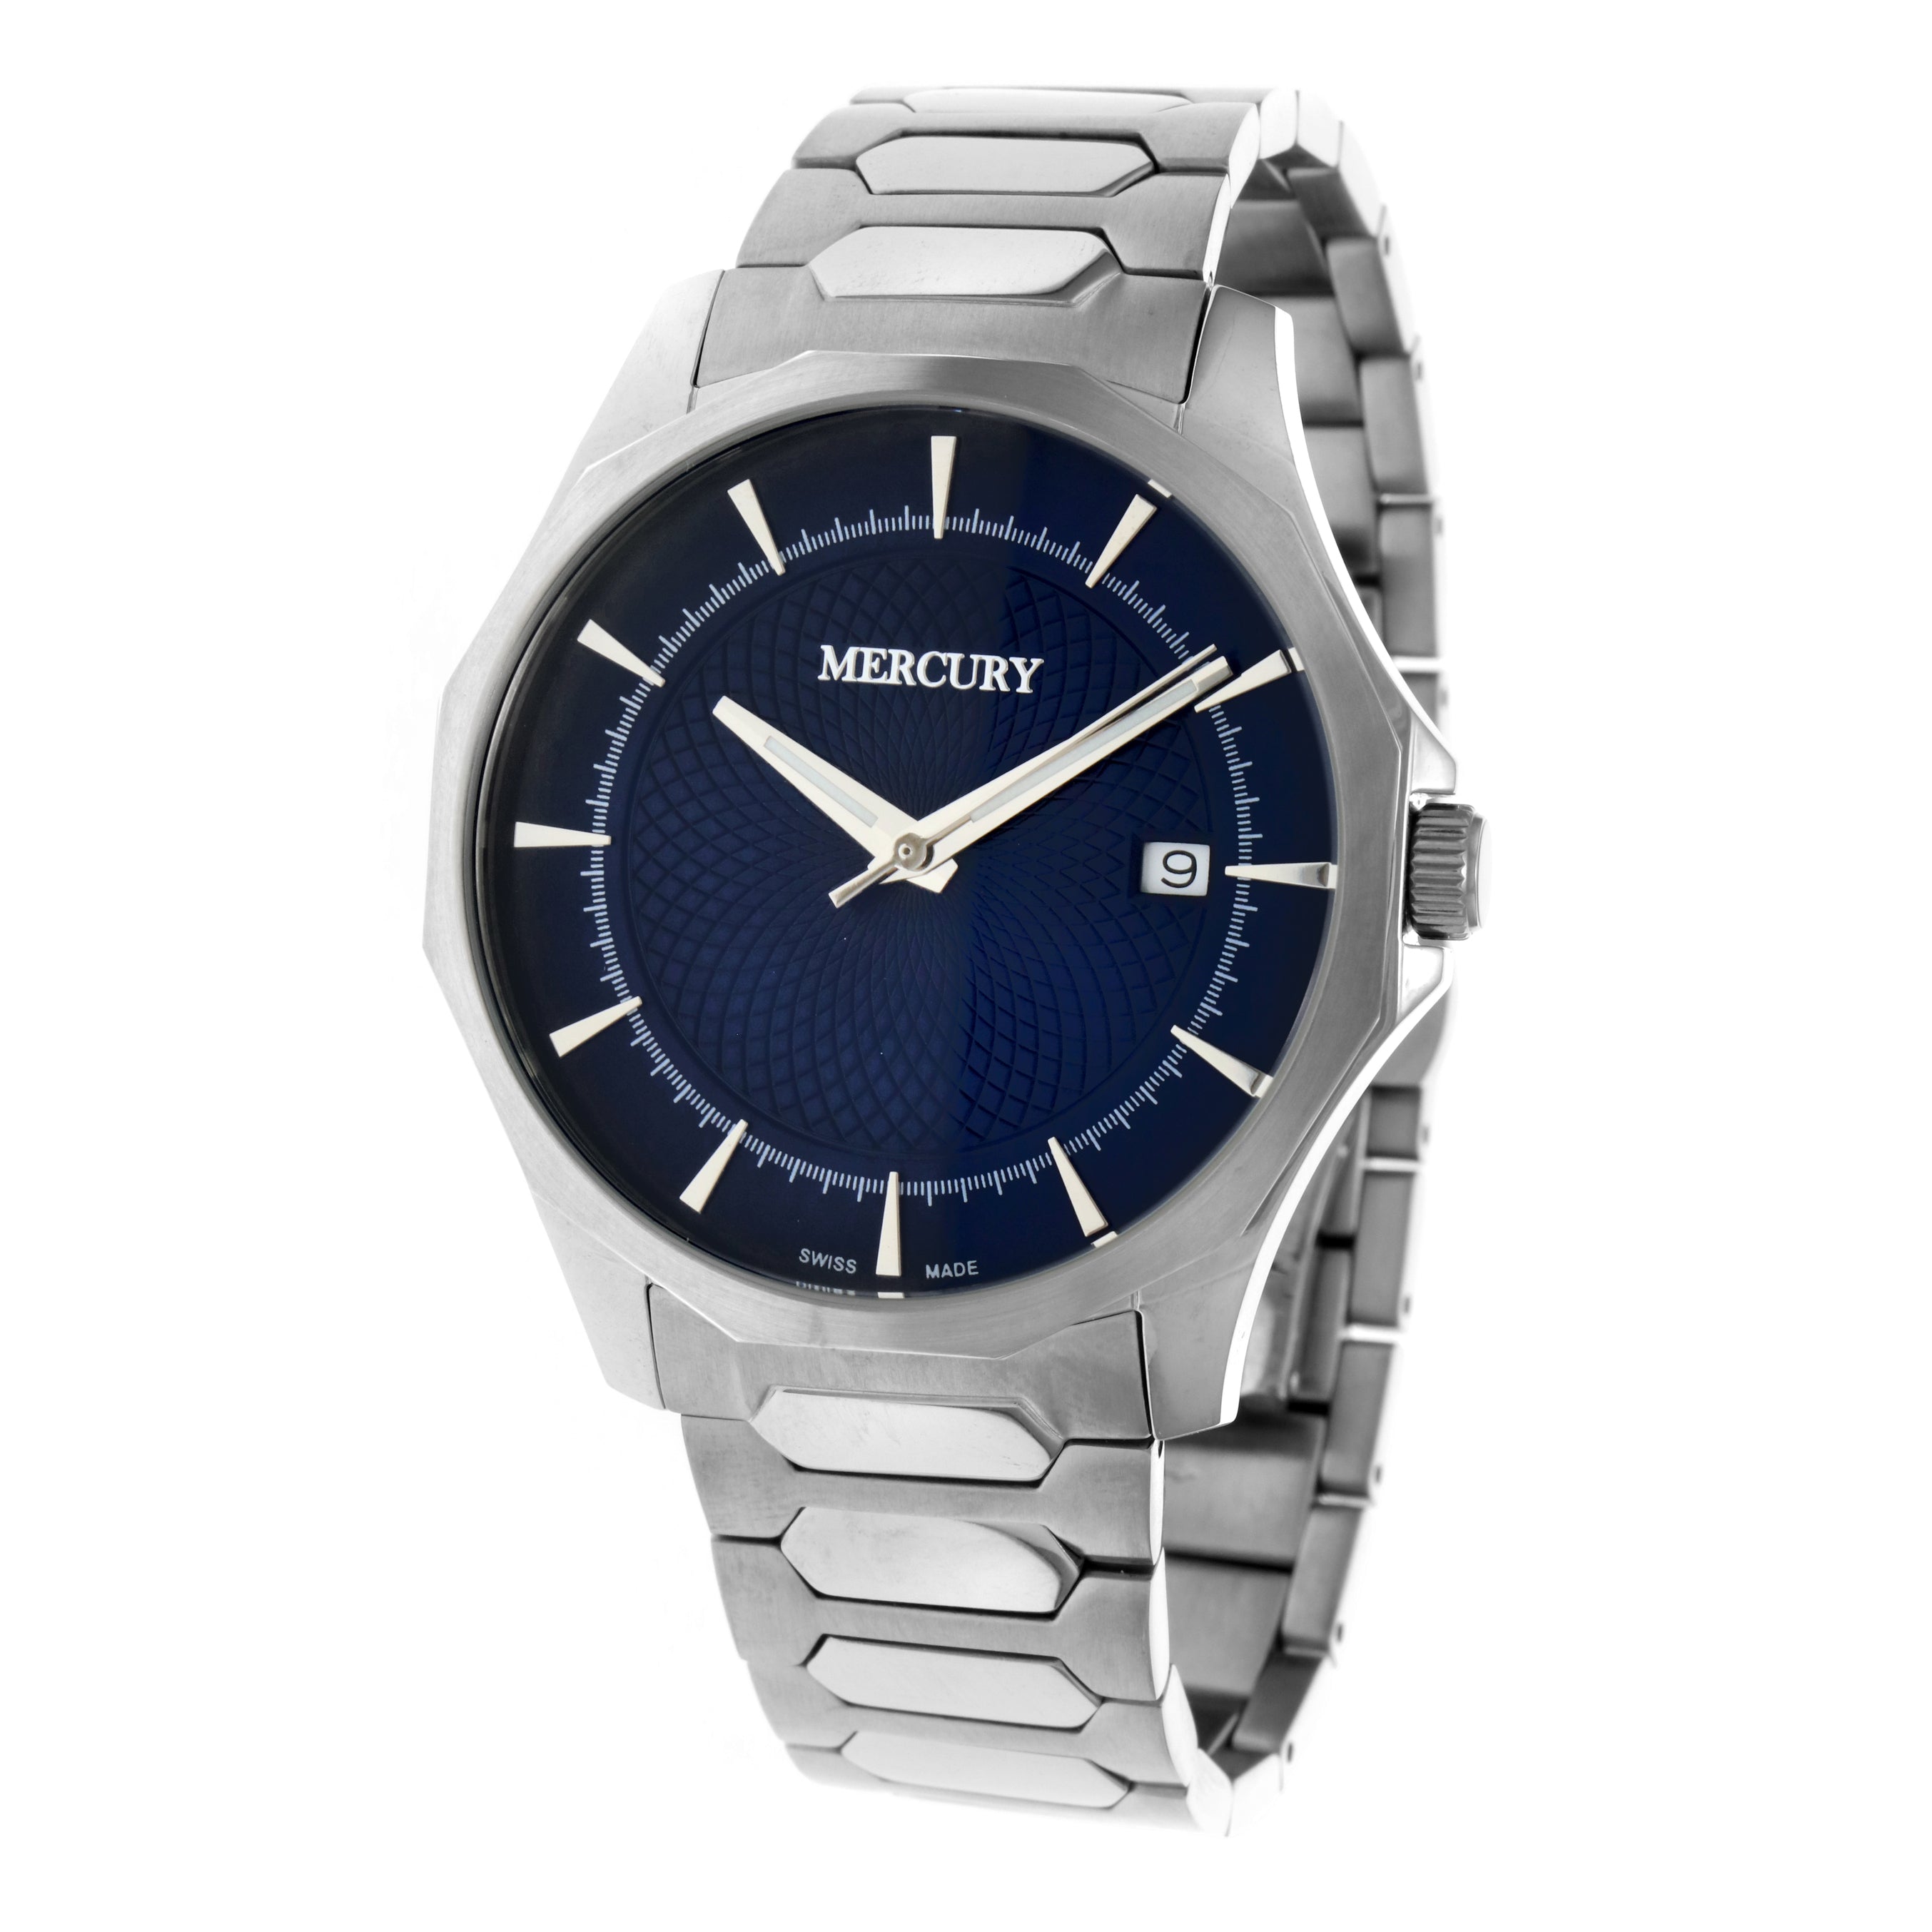 Mercury Men's Swiss Quartz Watch with Blue Dial - MER-0048